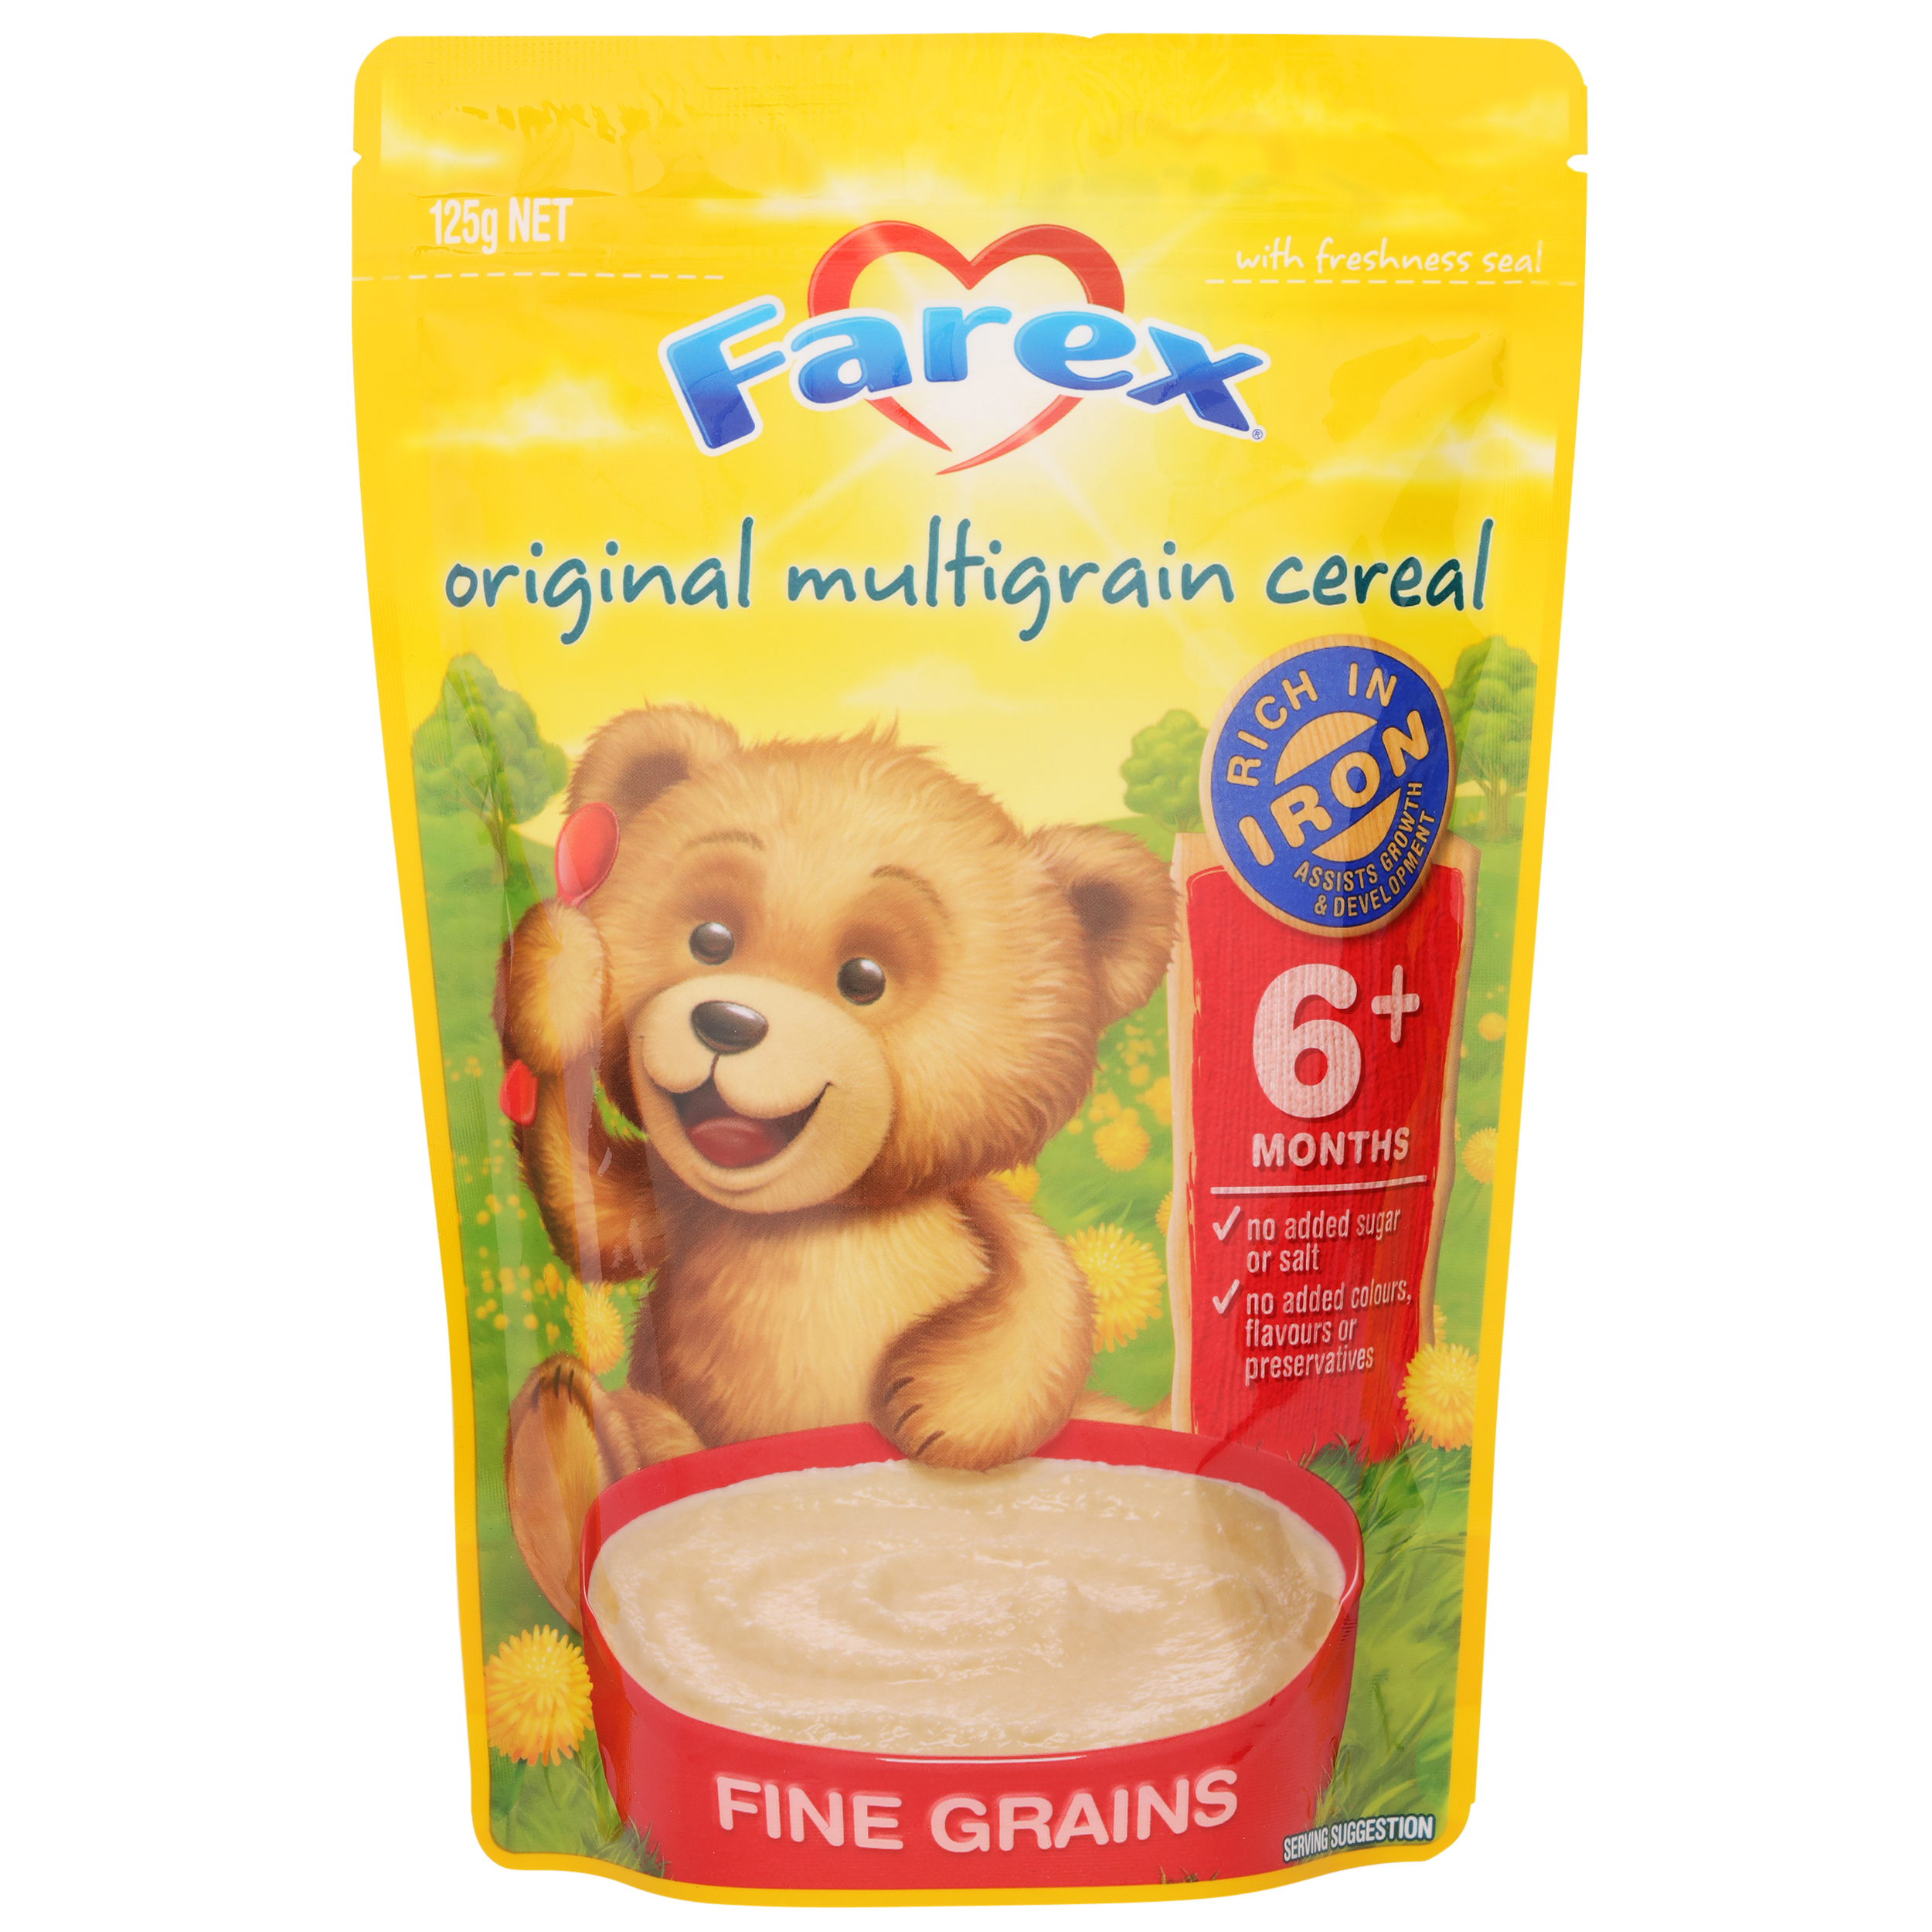 Farex Original Multigrain Cereal